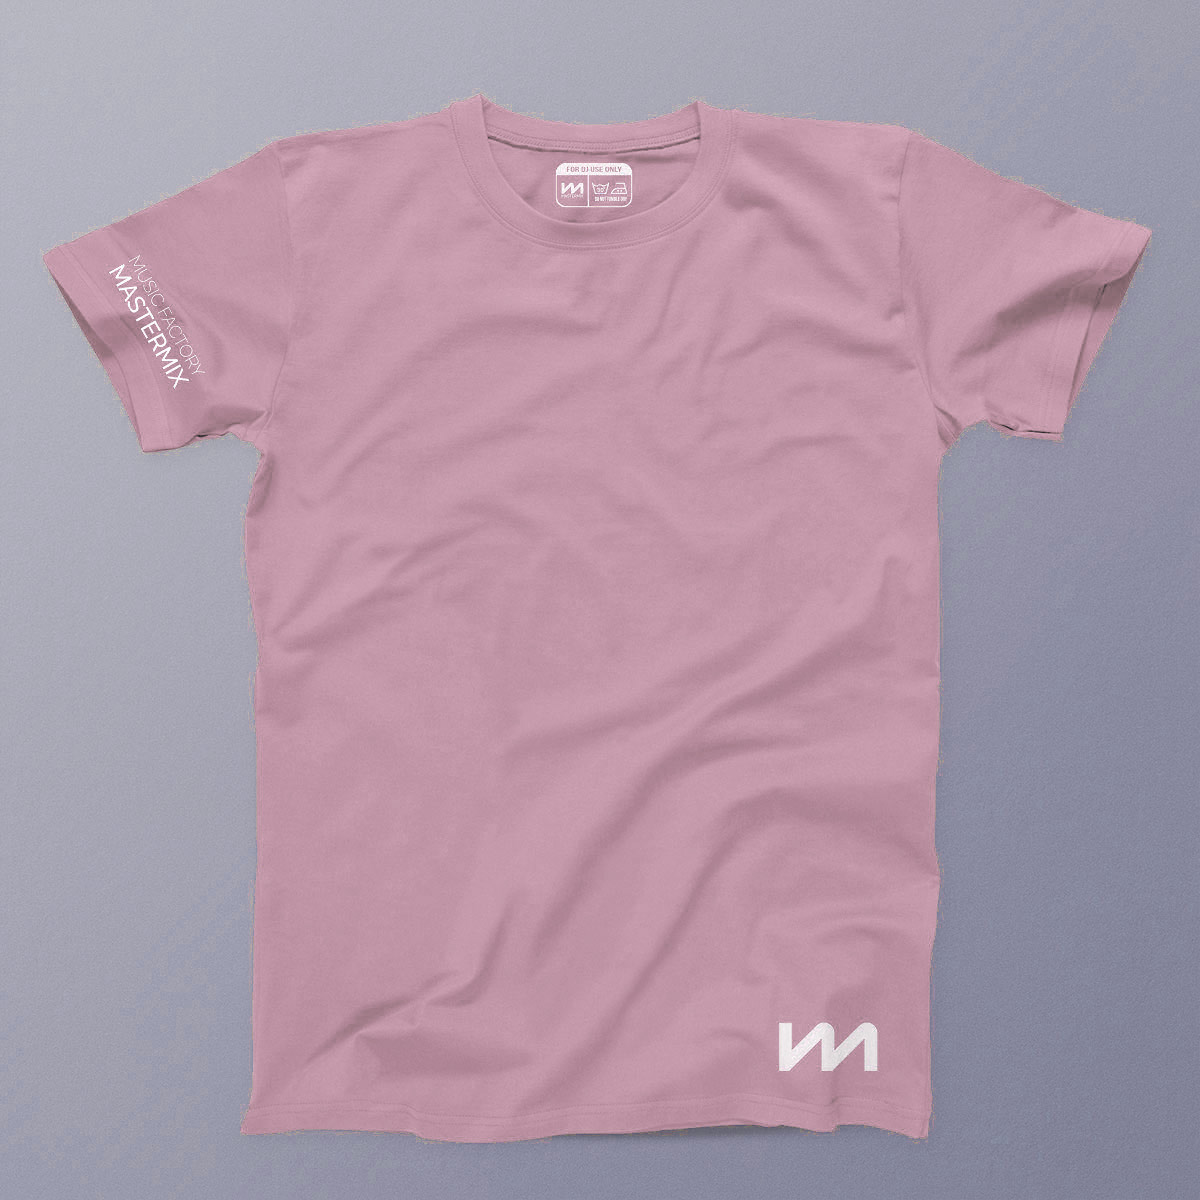 mastermix tshirt pale pastel pink